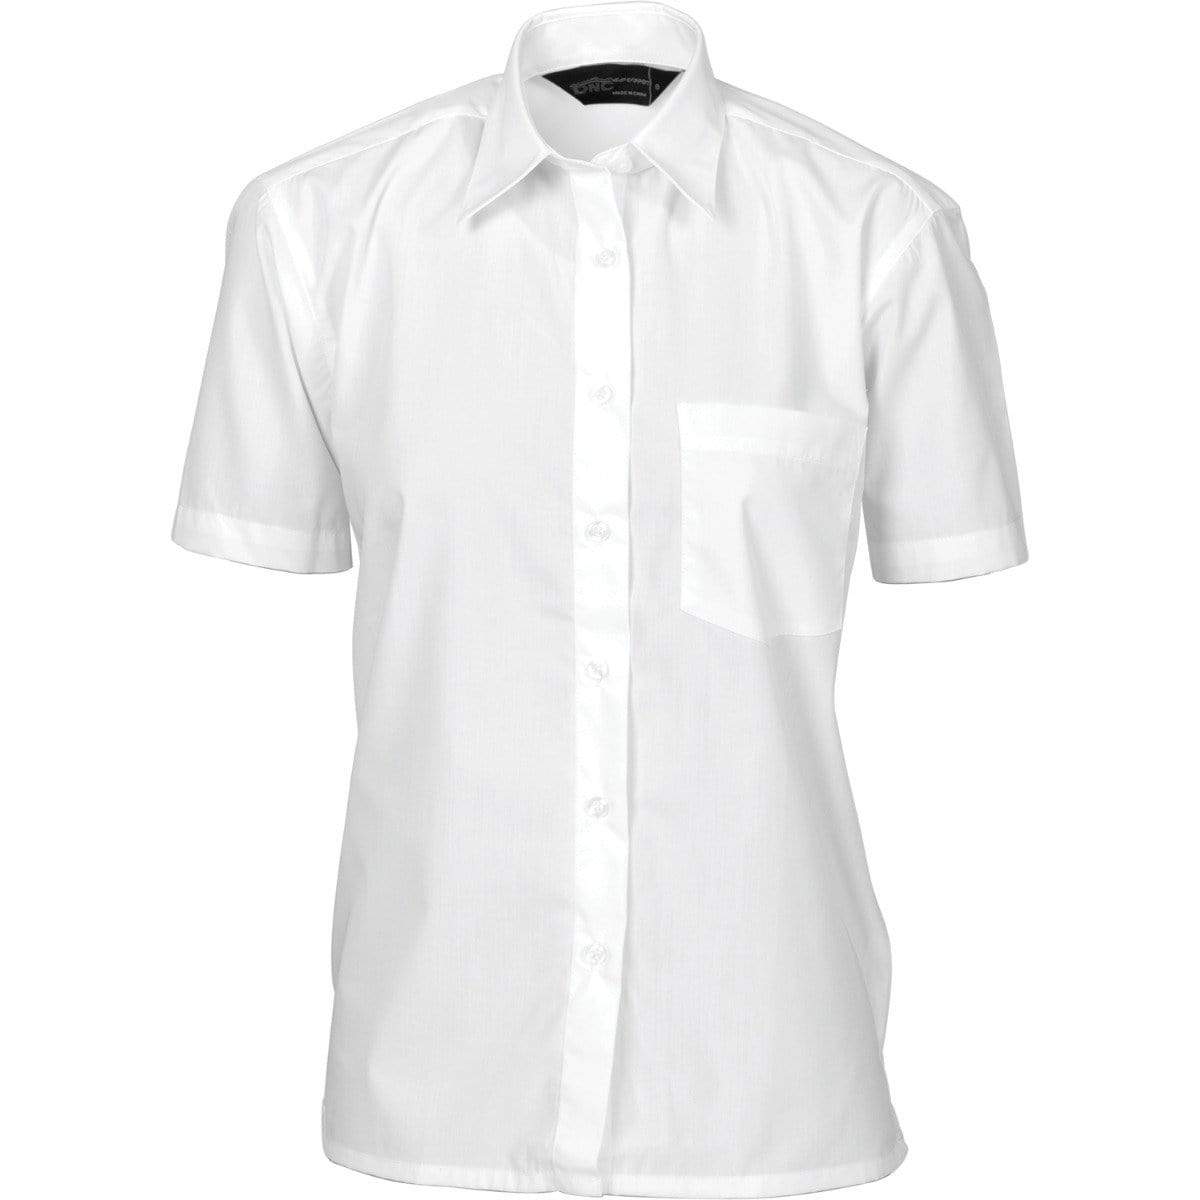 Dnc Workwear Ladies Polyester Cotton Short Sleeve Poplin Shirt - 4201 Corporate Wear DNC Workwear White 6 